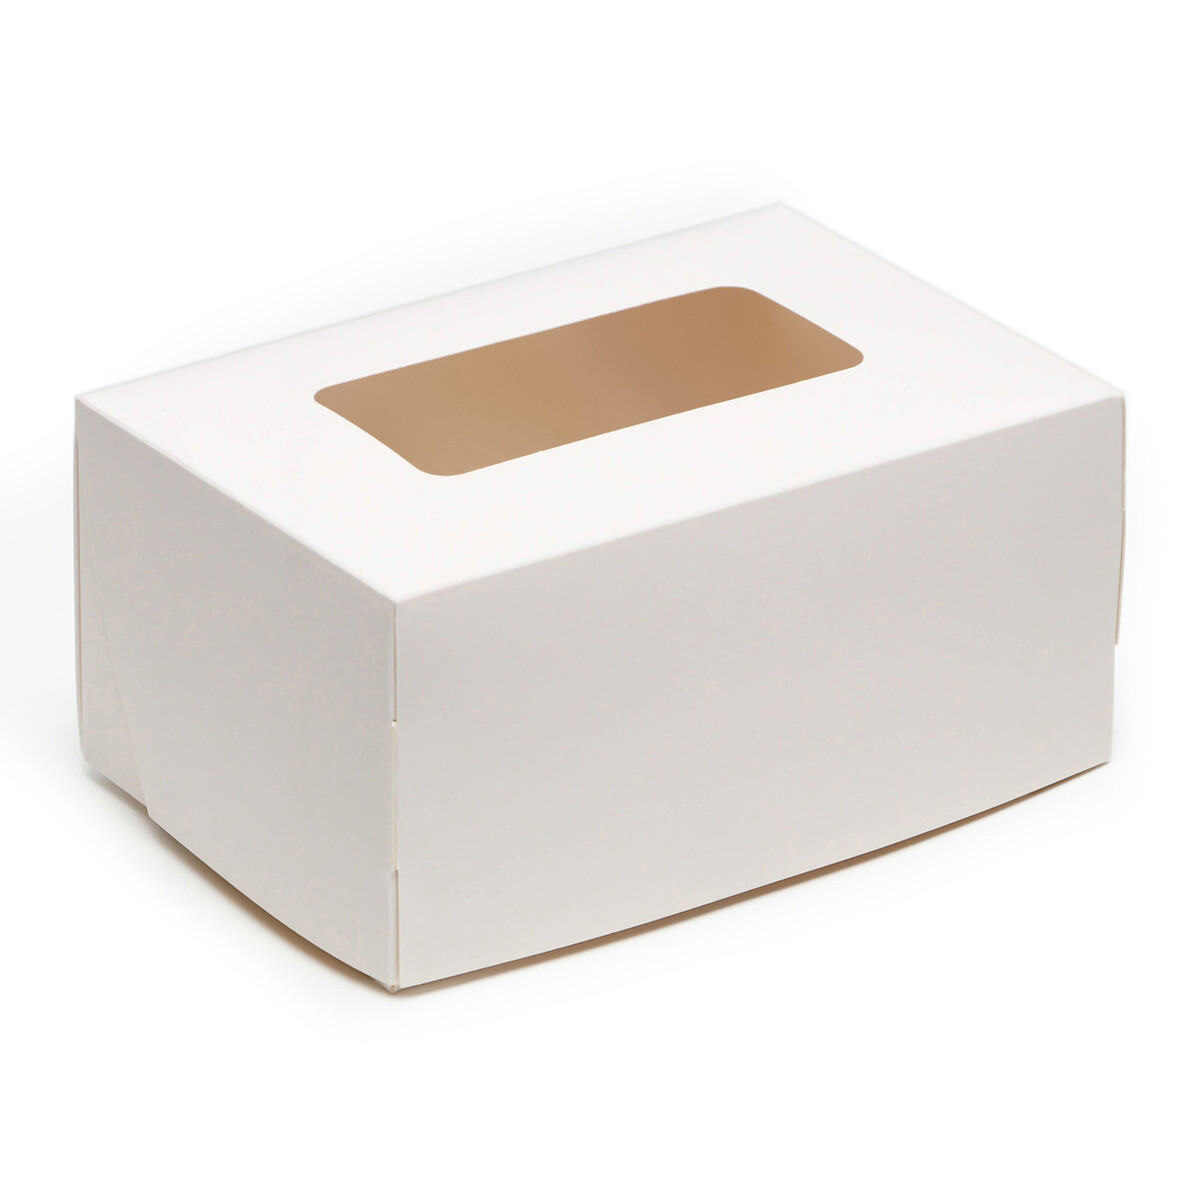 

Коробка складная, с окном, белая, 15 х 10 х 7 см, набор 10 шт., Белый